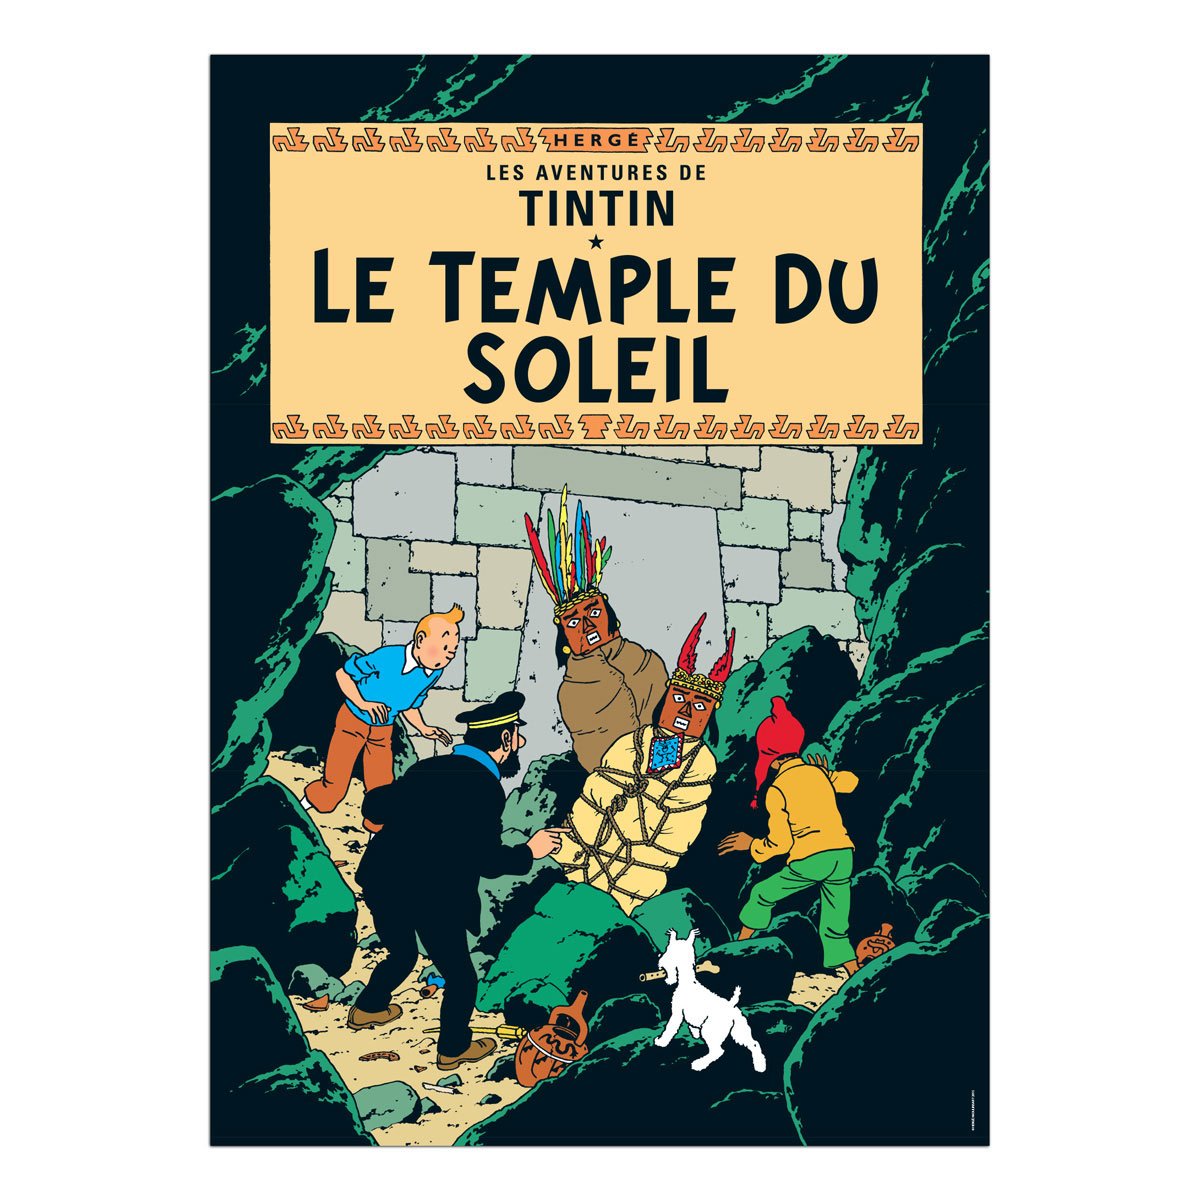 Prisoners Tintin poster